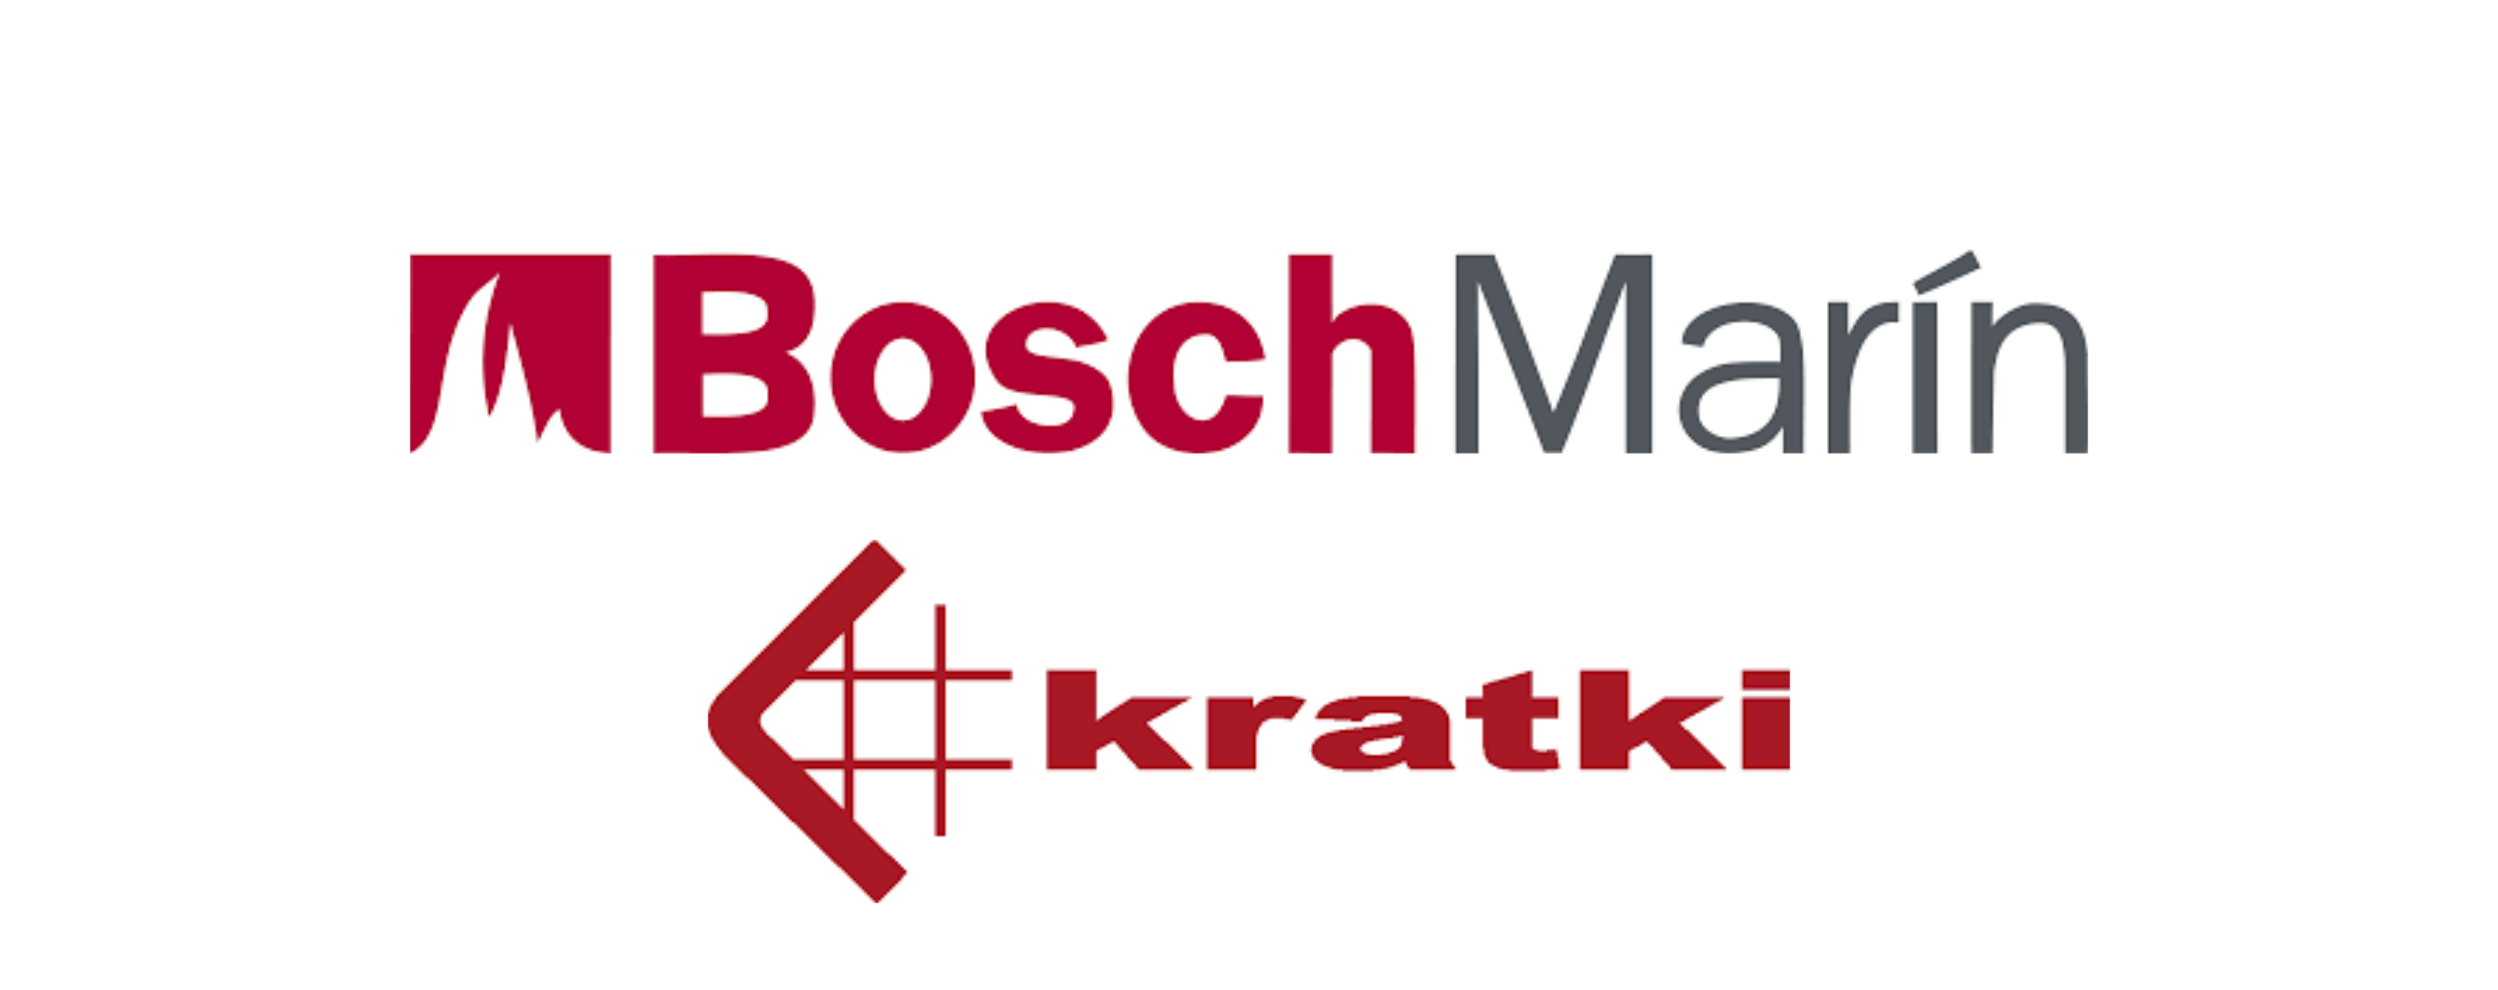 Bosch Marin apresenta Kratki